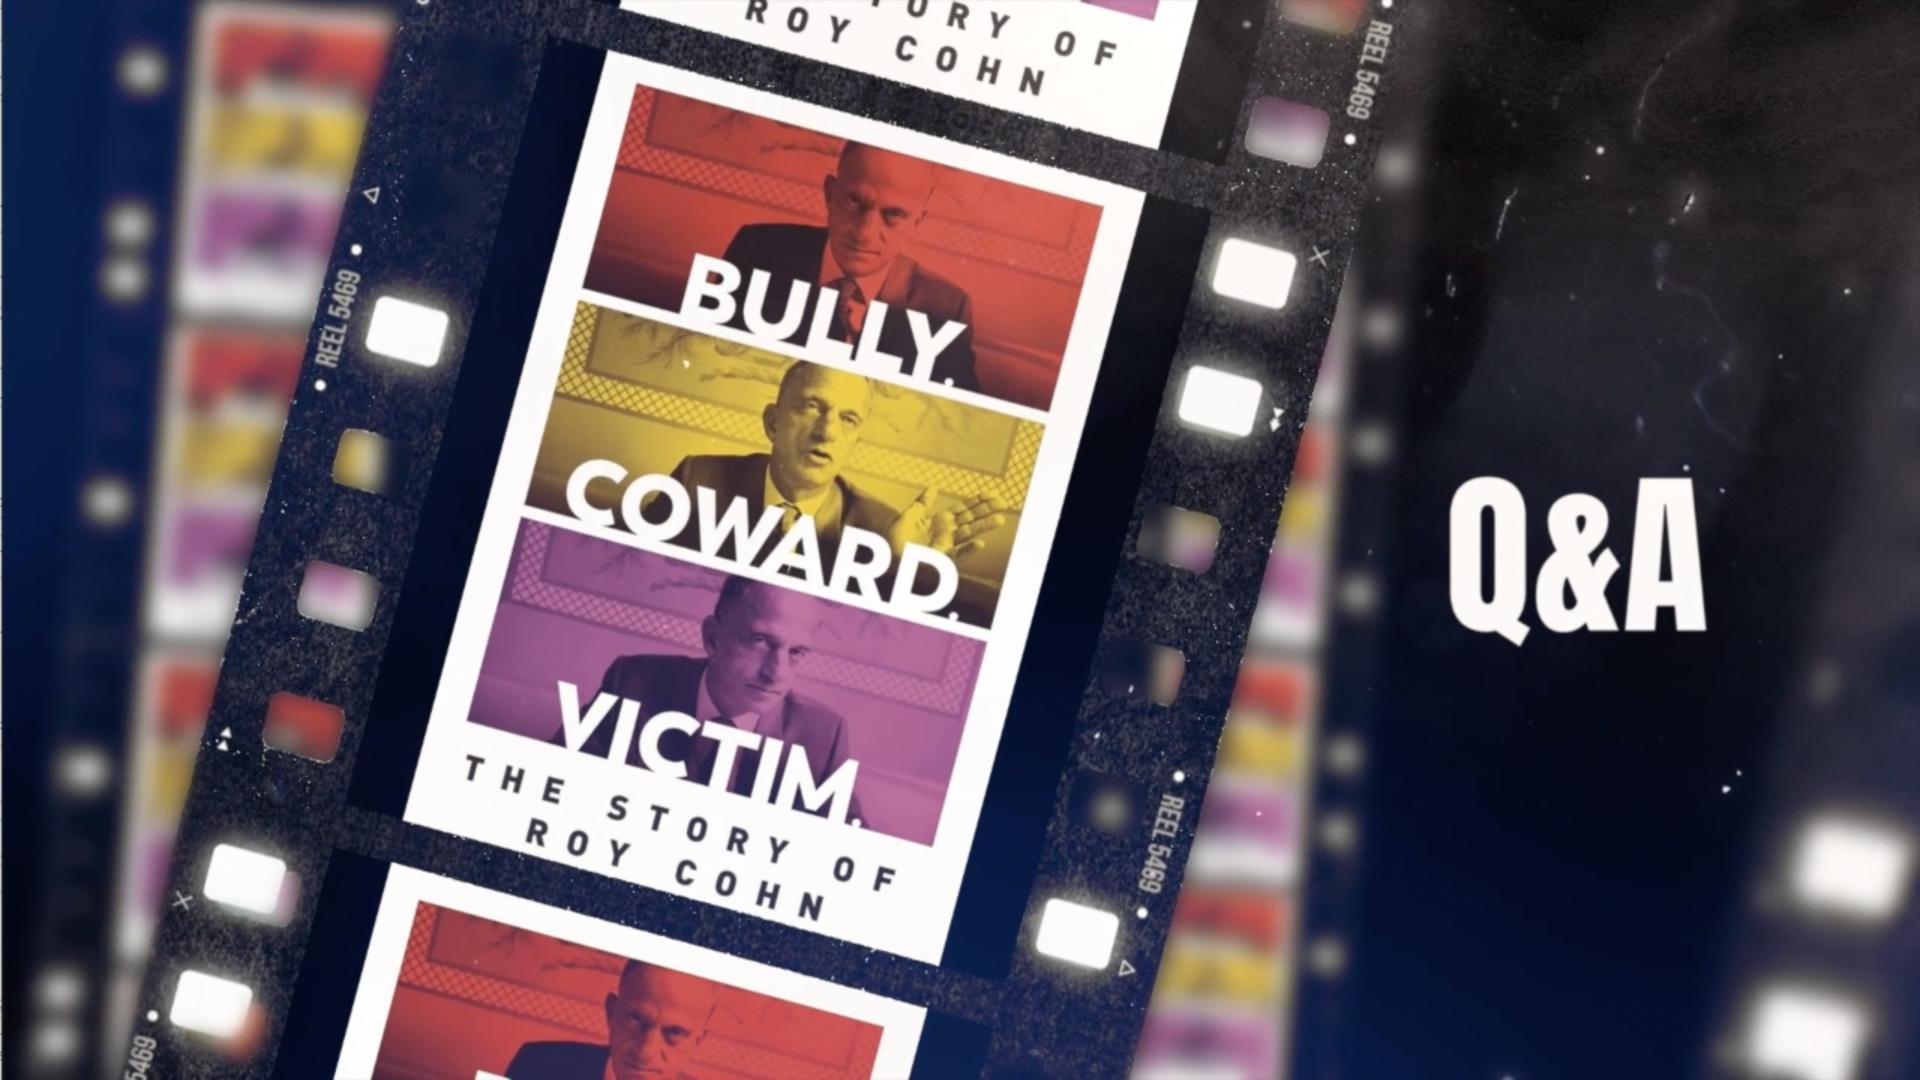 Post-Movie Program: Bully. Coward. Victim. The Story of Roy Cohn